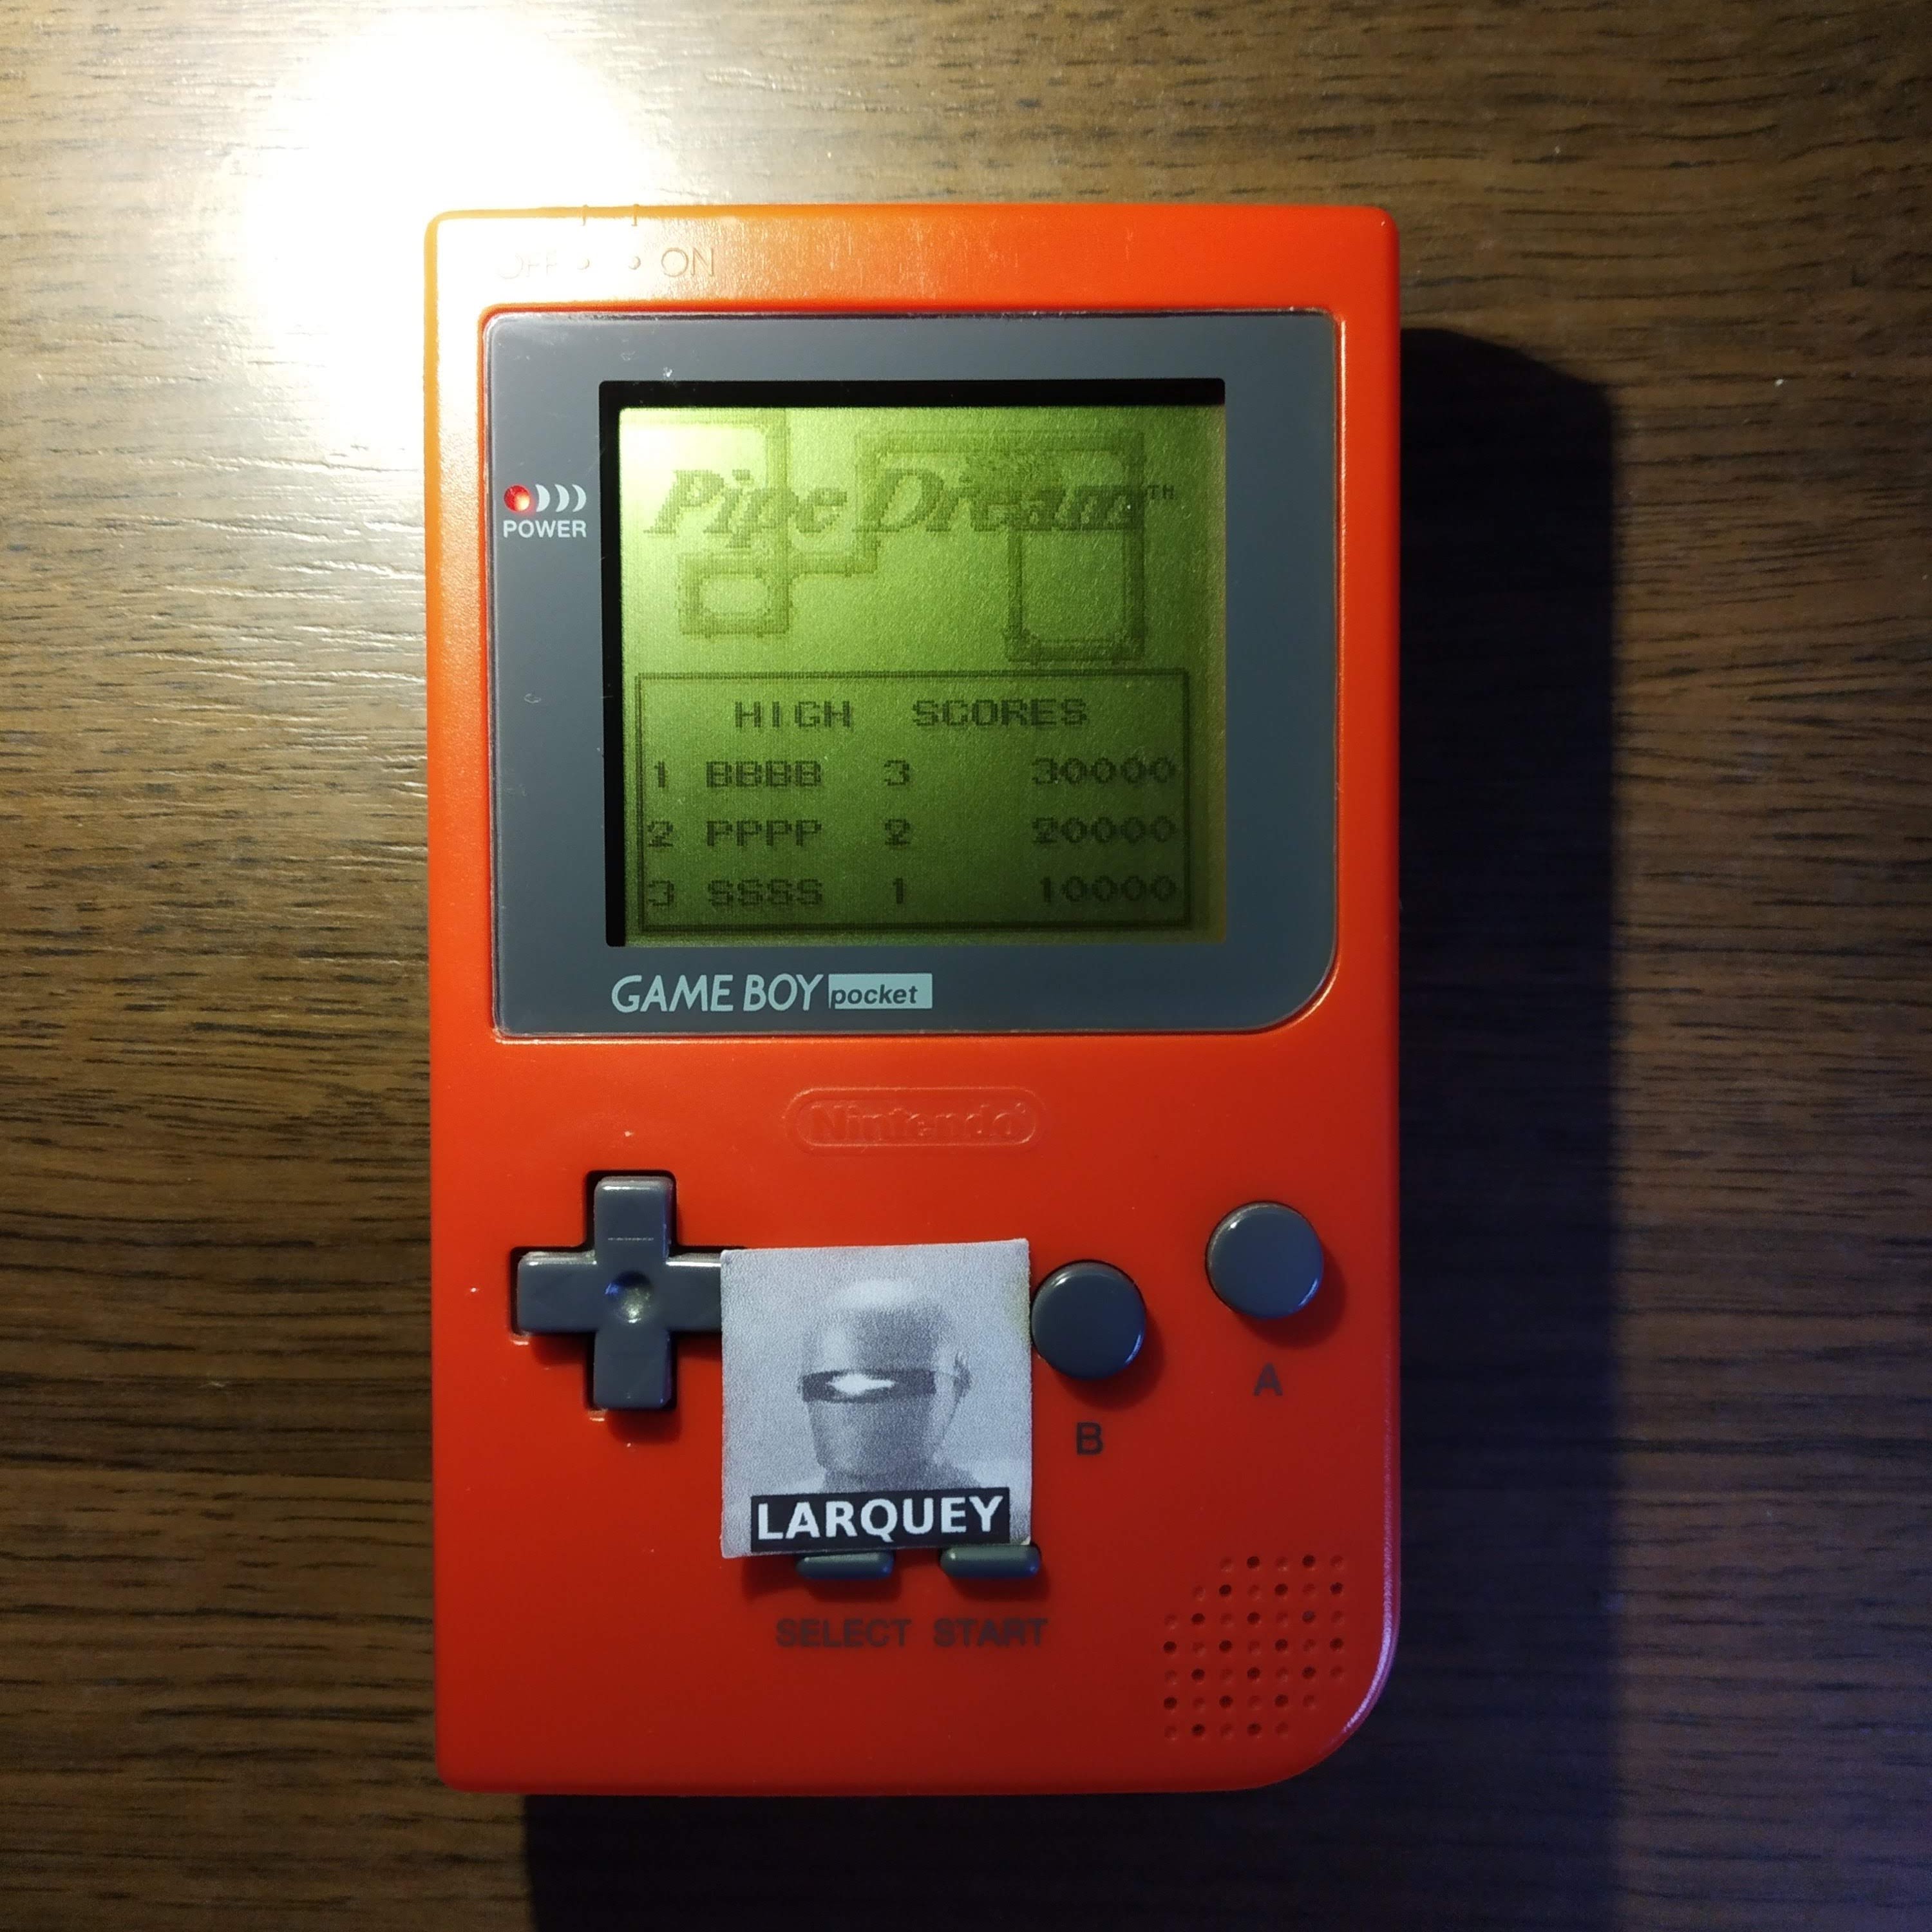 Larquey: Pipe Dream (Game Boy) 9,750 points on 2020-04-28 10:53:55